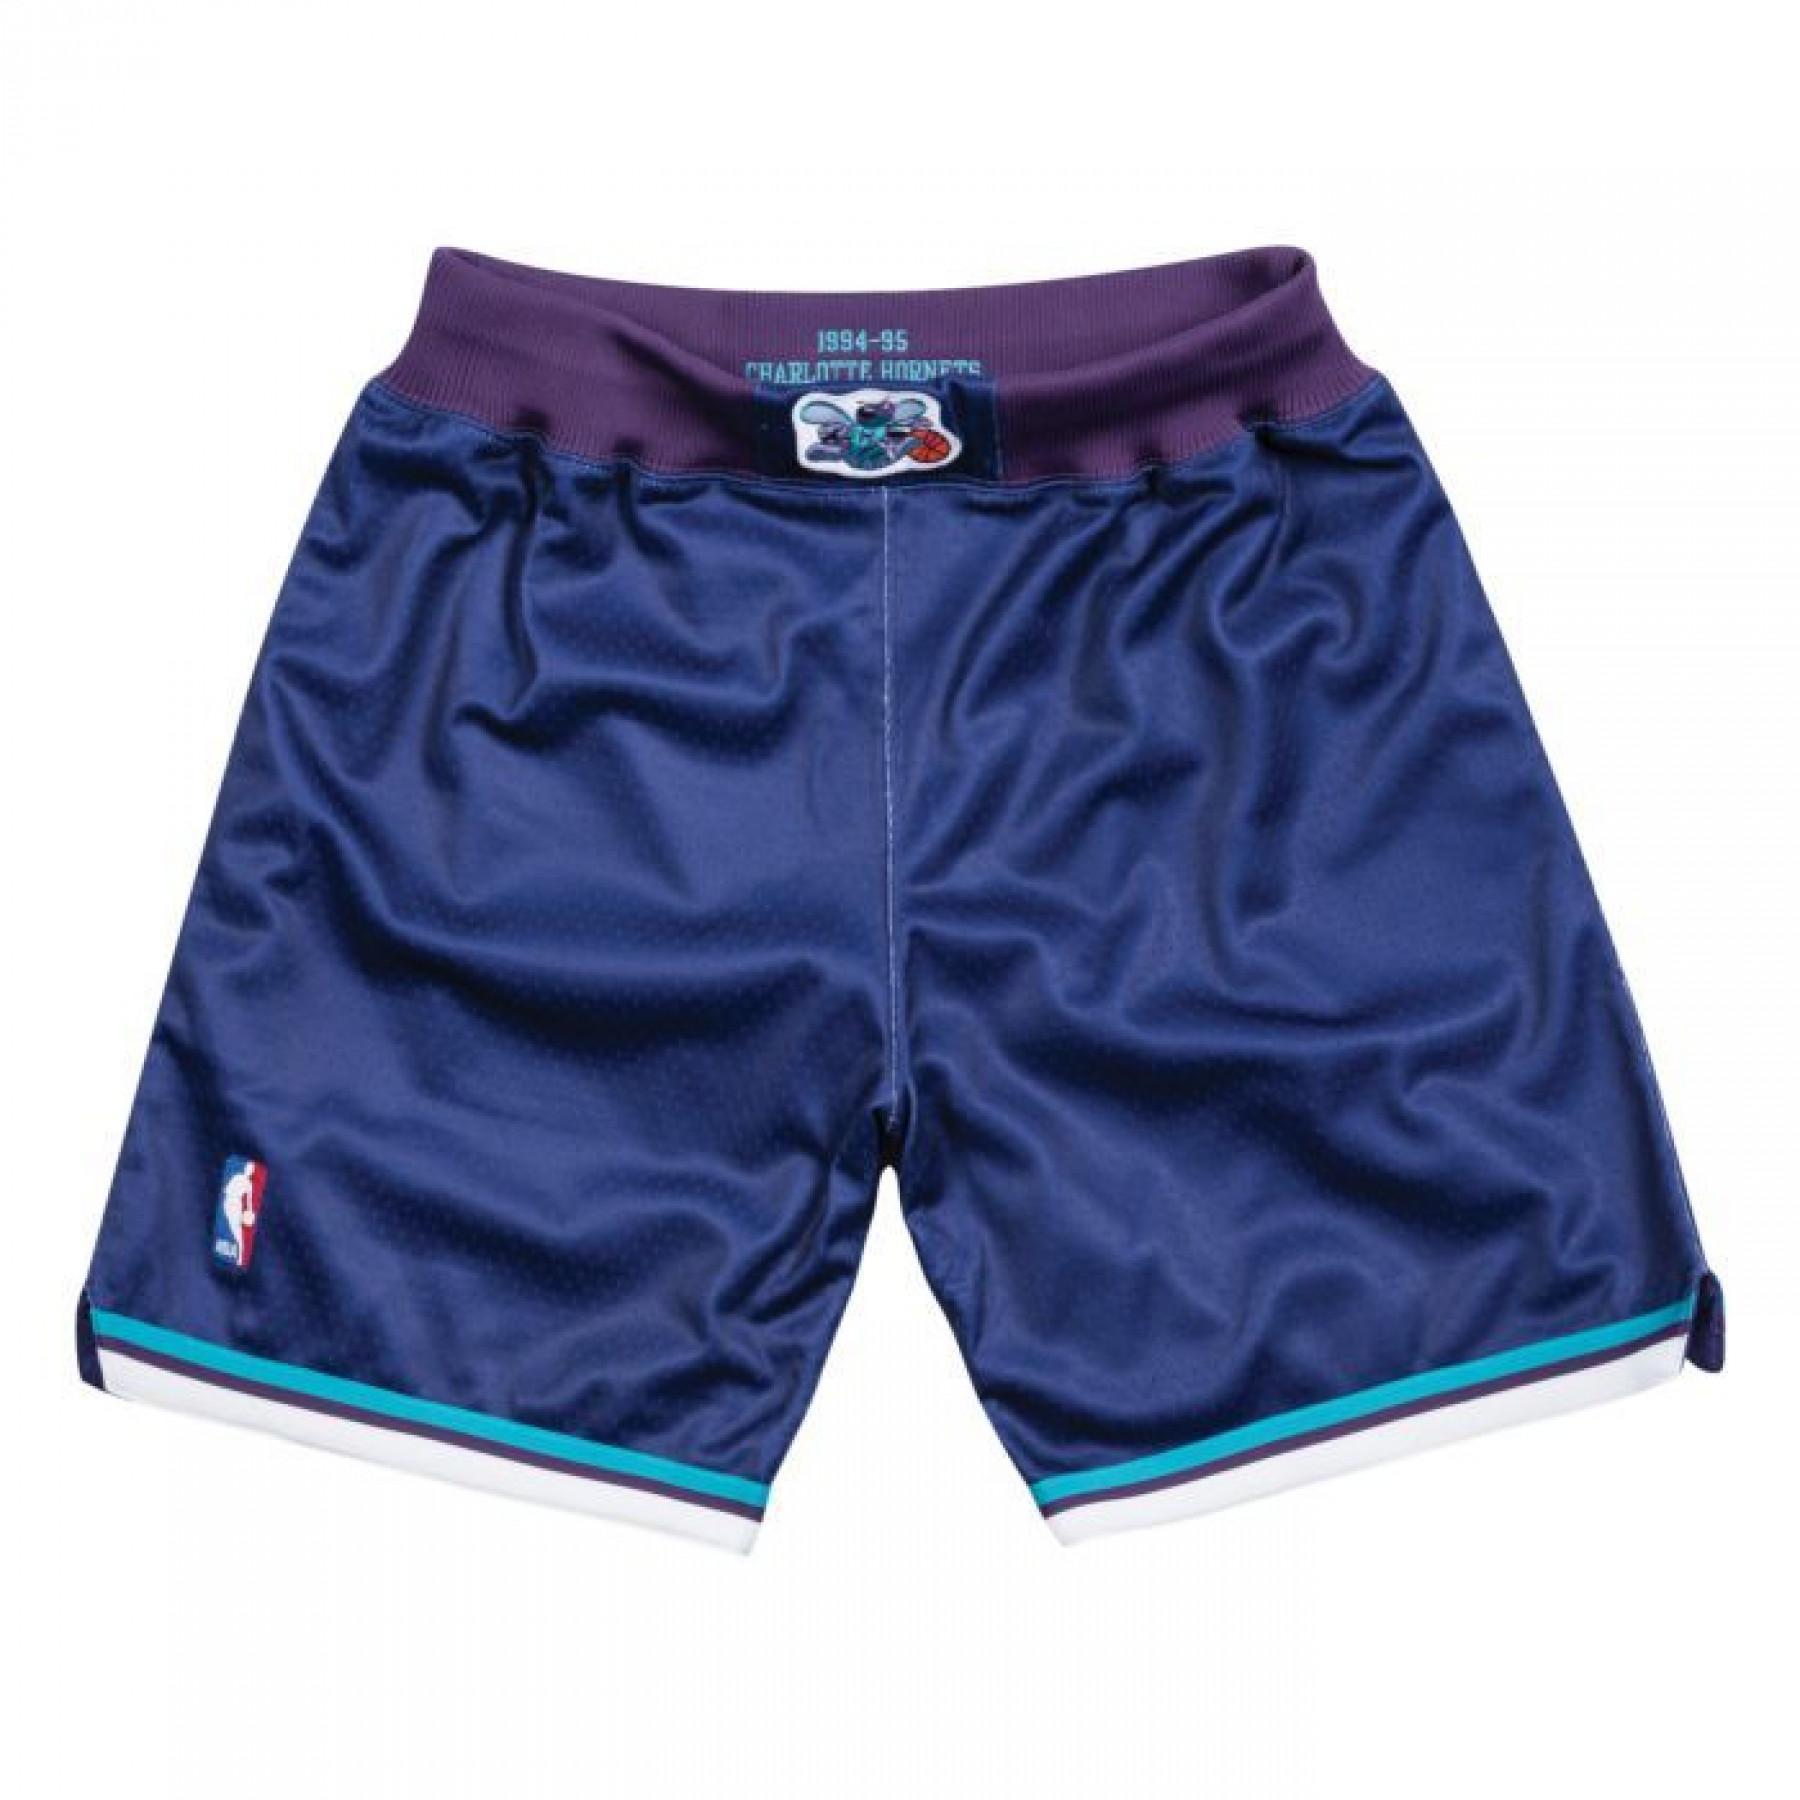 Äkta Charlotte Hornets shorts 1994-1995